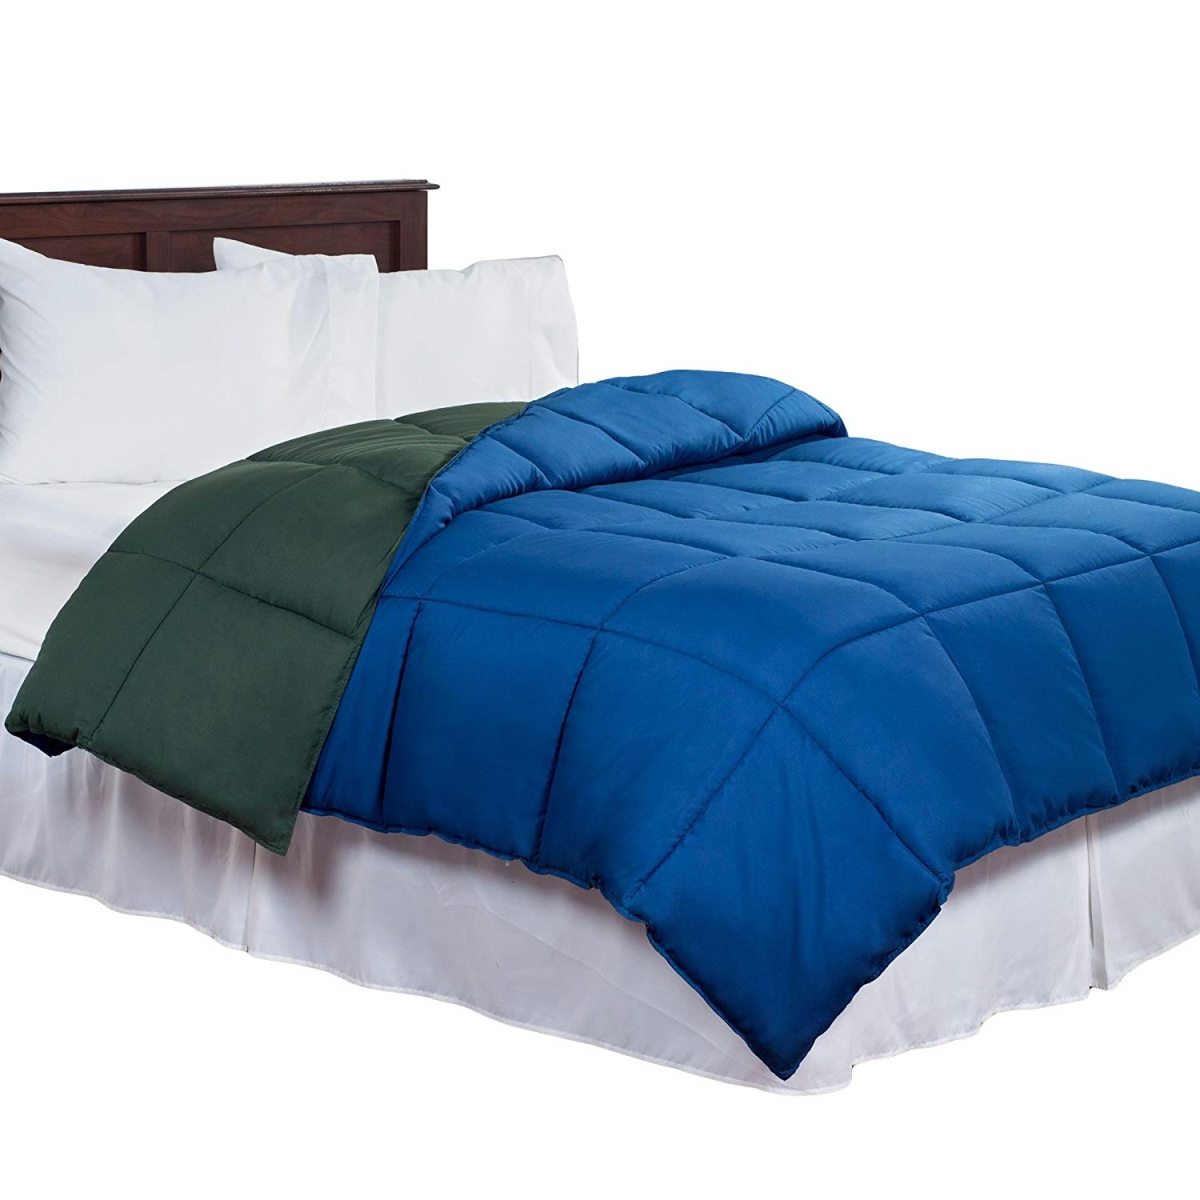 64a-23873 Reversible Down Alternative Comforter, Twin Size - Dark Green & Dark Blue